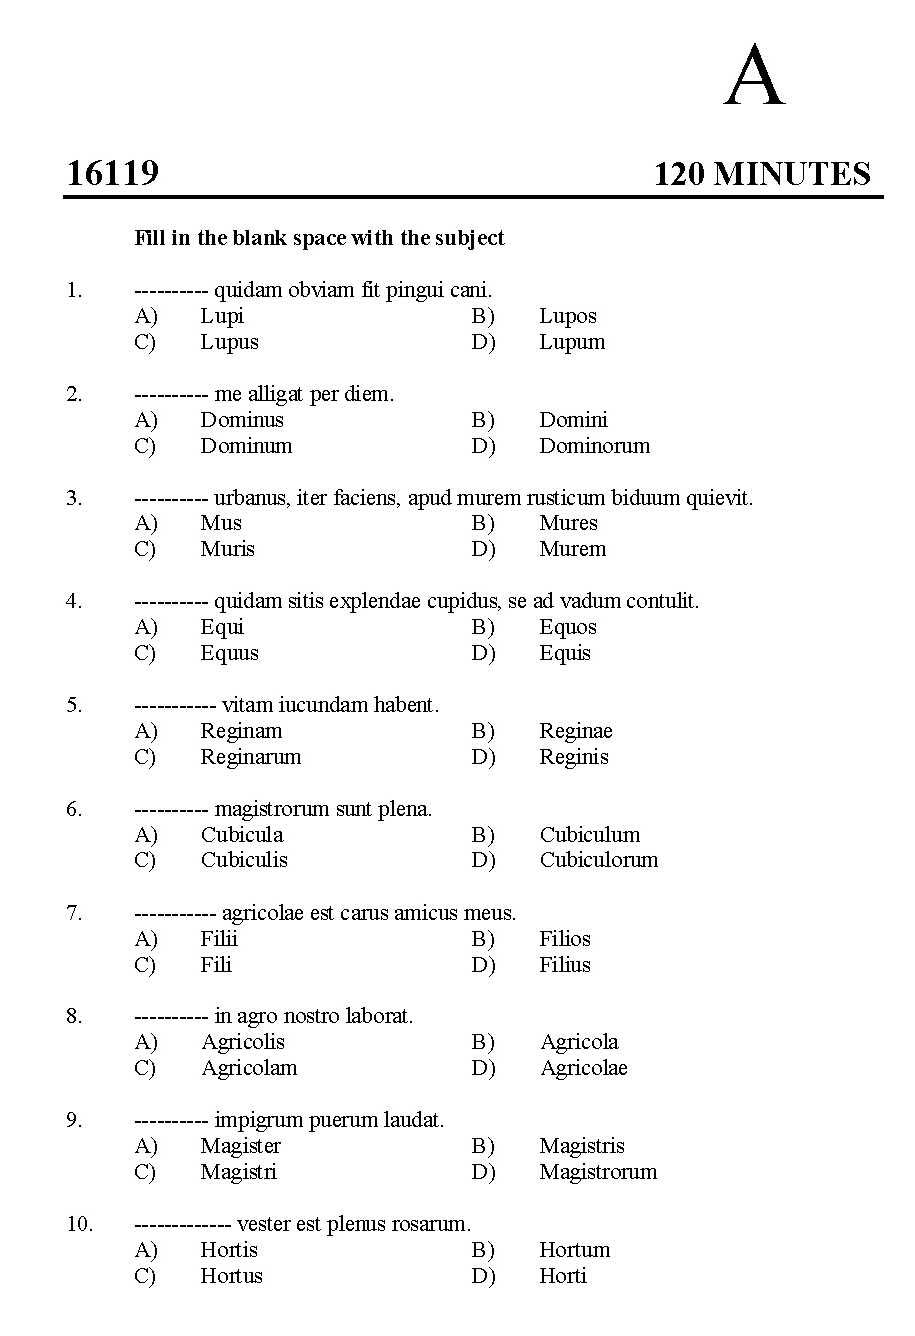 Kerala SET Latin Exam 2016 Question Code 16119 A 1